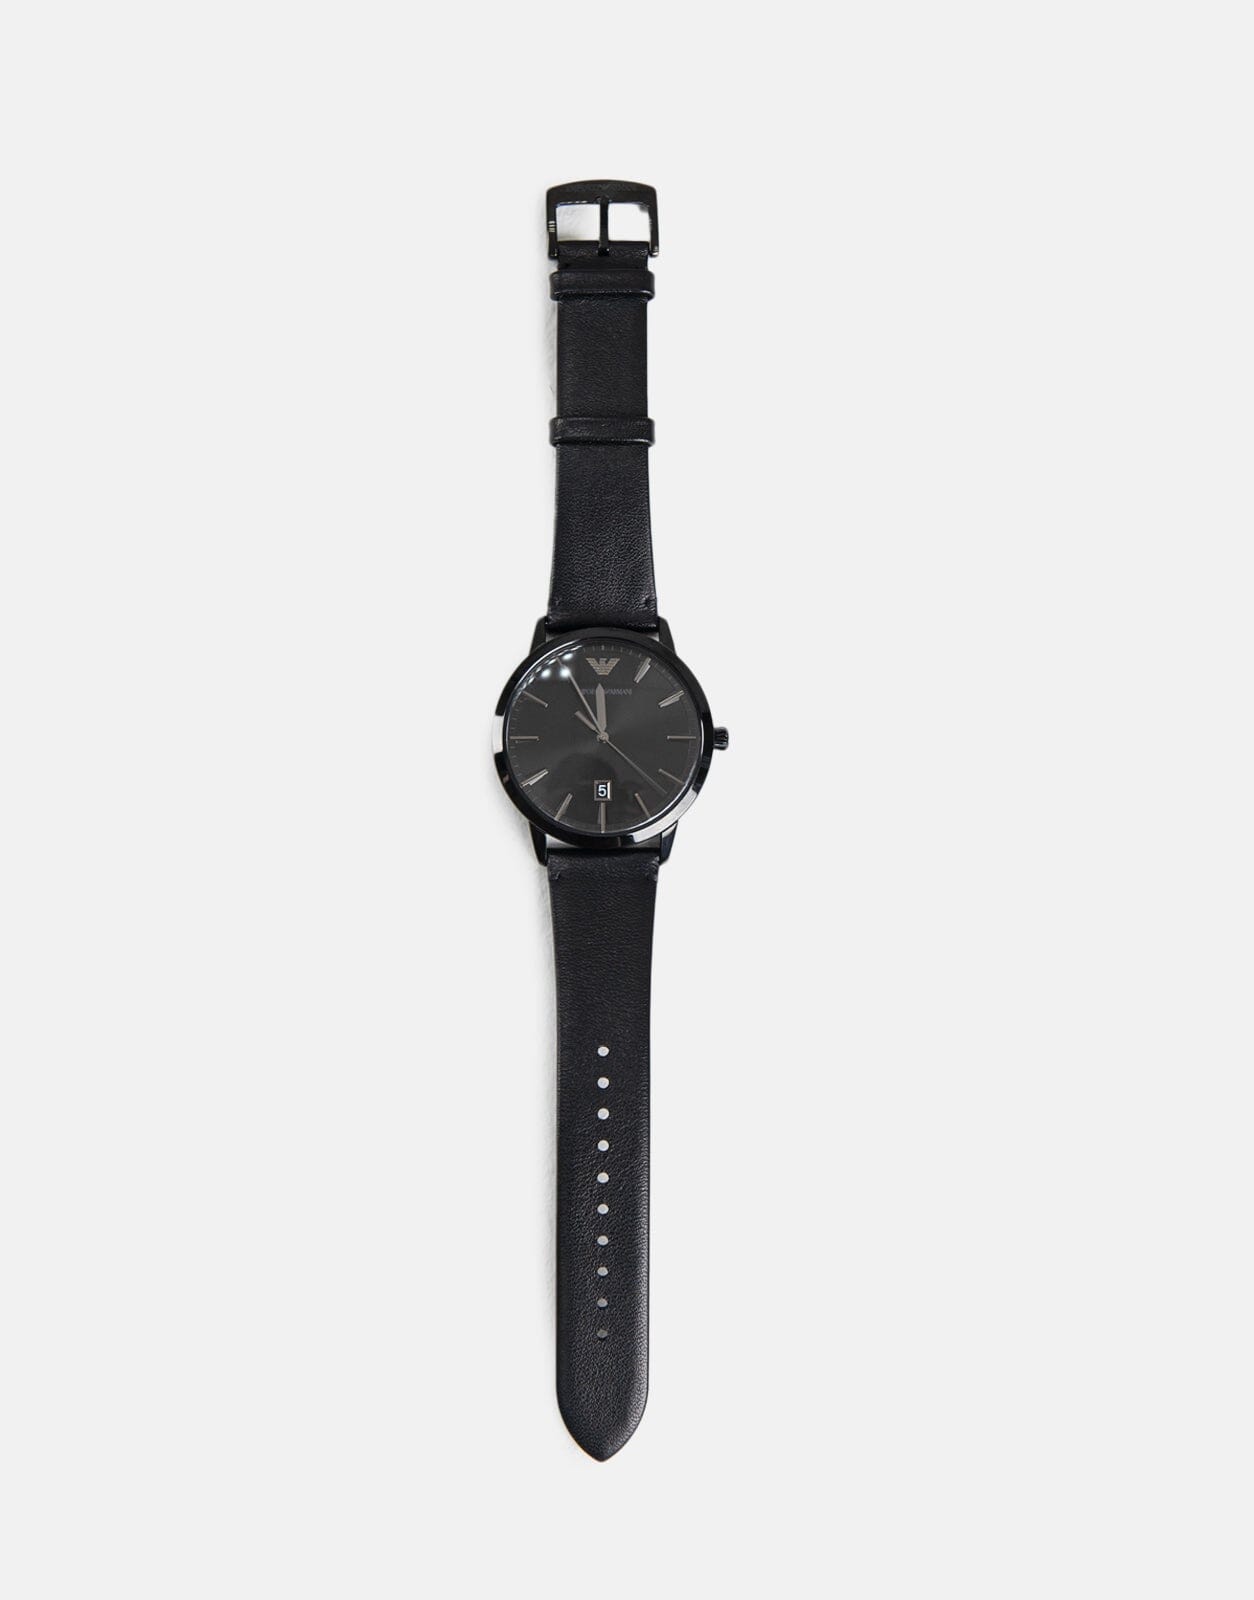 Armani Exchange Ruggero Black Leather Watch - Subwear